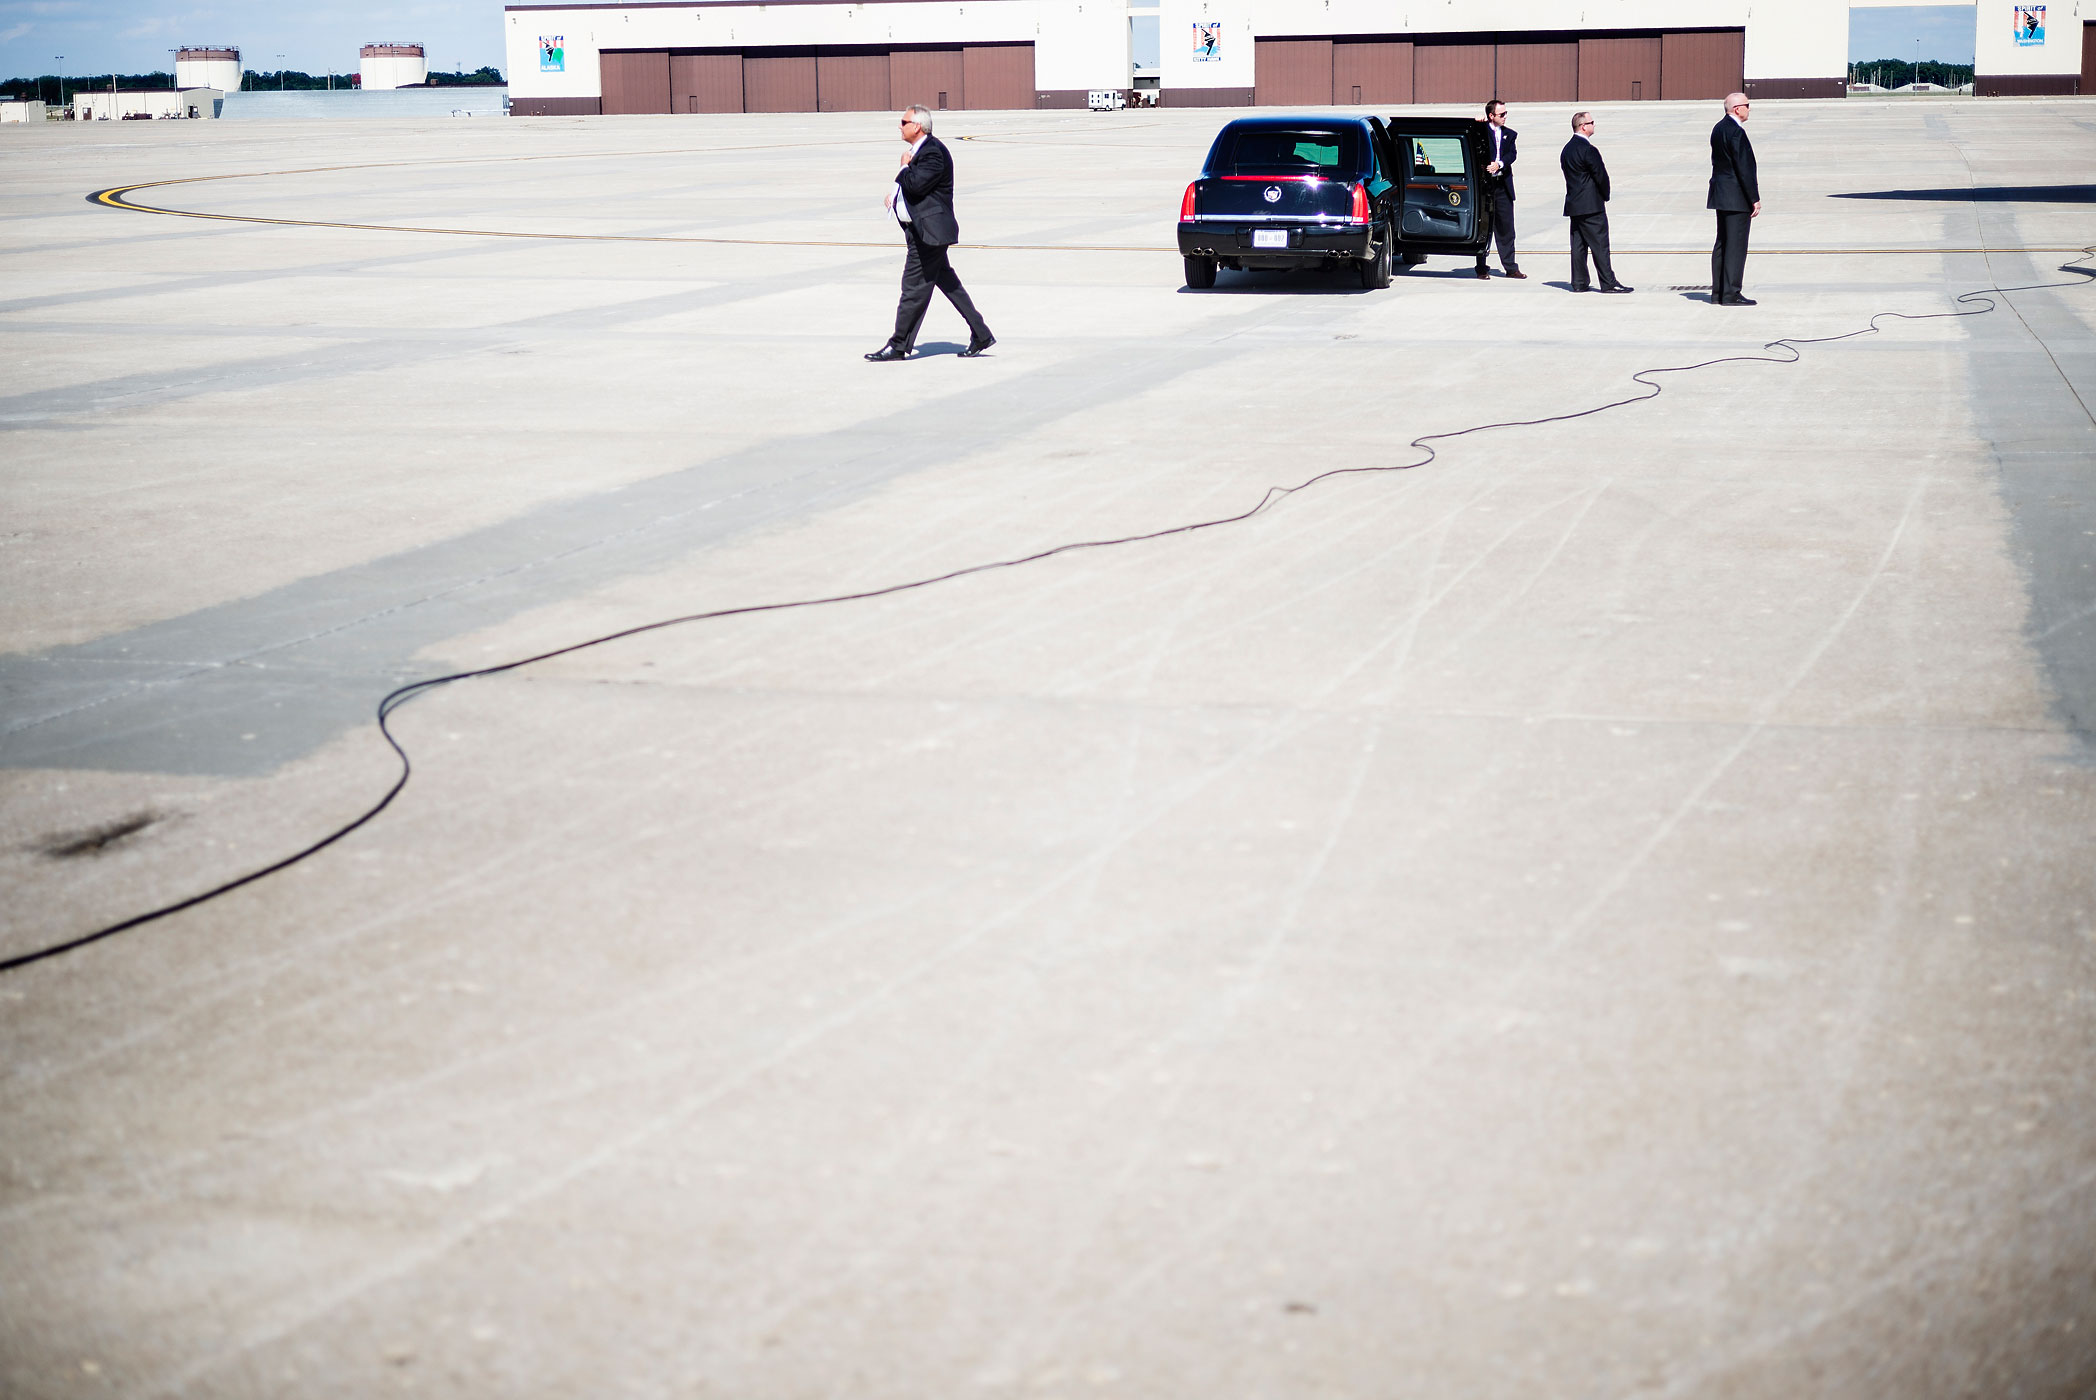 Secret Service agents wait near a car at Whiteman Air Force Base July 24, 2013 in Missouri.